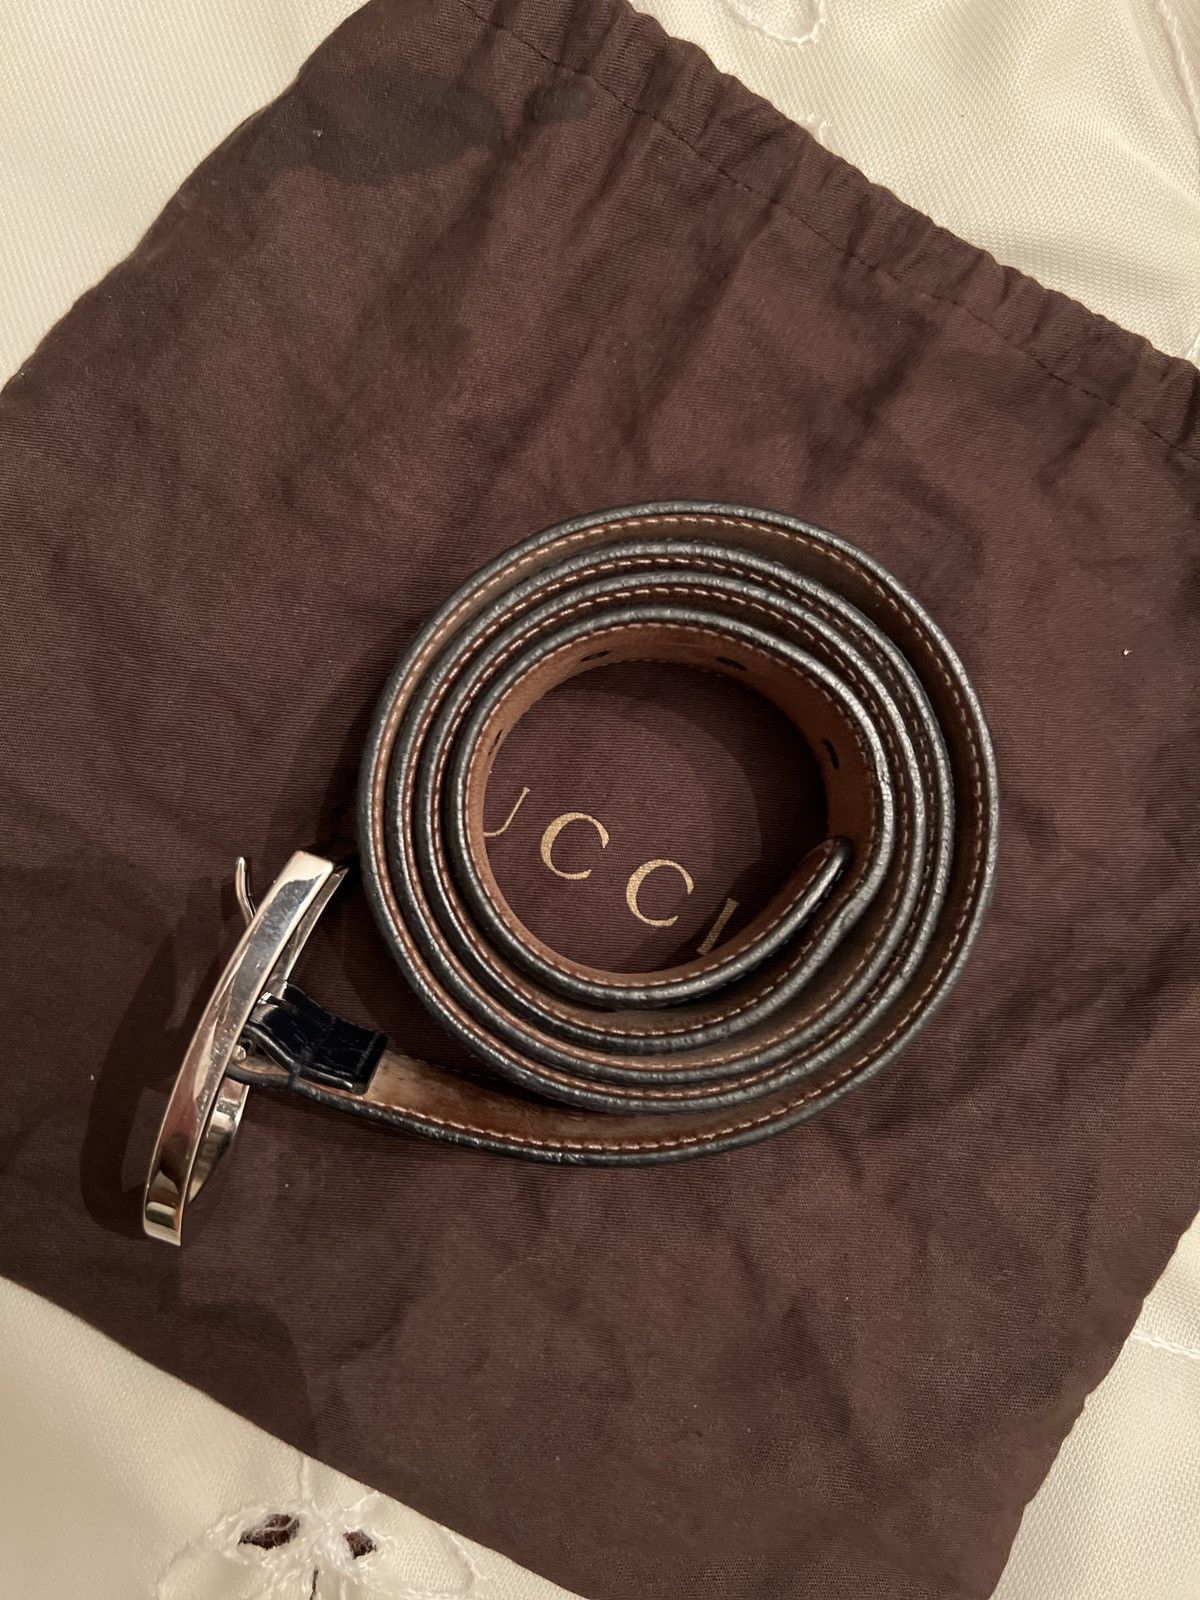 Gucci Gucci Guccissima Leather Belt Size 34 - 4 Thumbnail